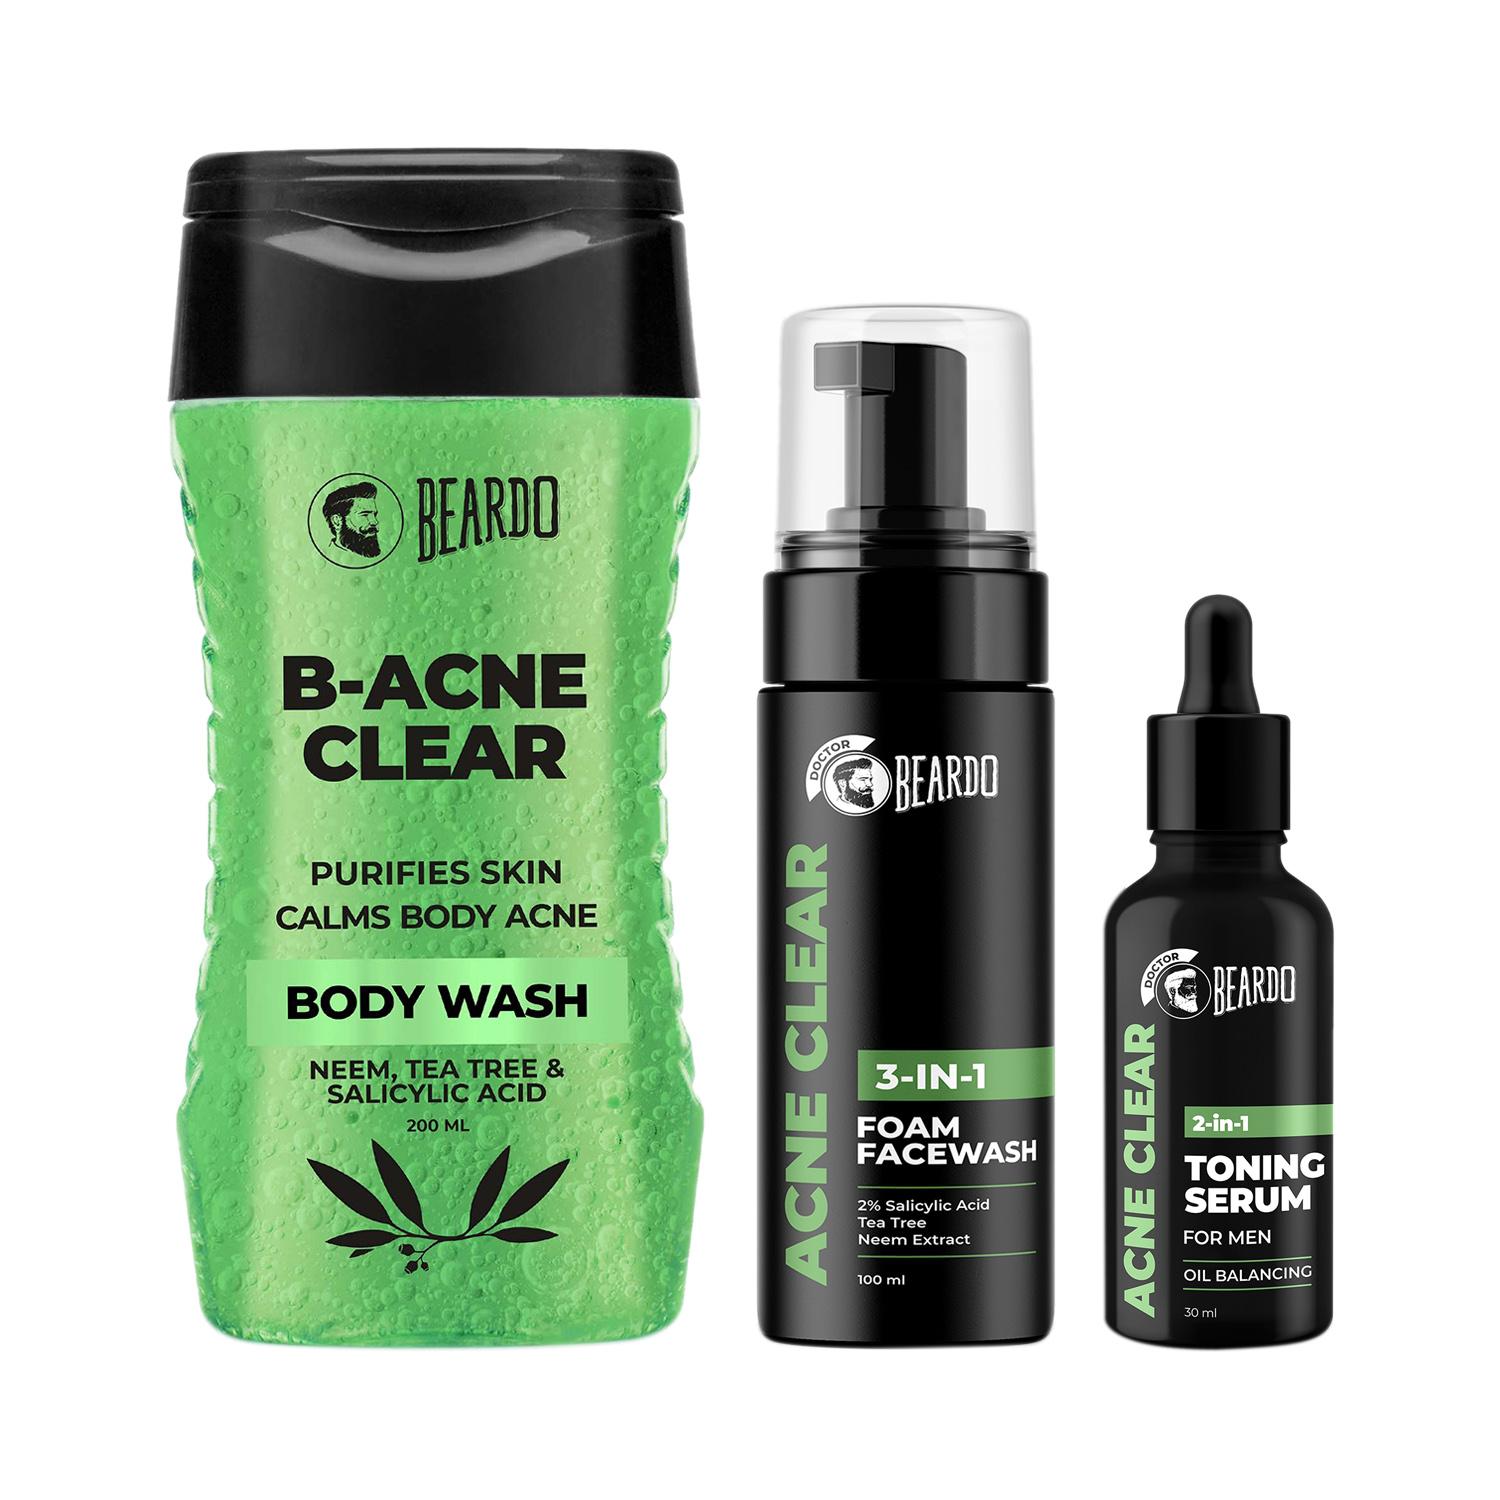 Beardo | Beardo B-acne Clear Body Wash, Foam Face wash & 2in1 Toning Serum (Set of 3) Combo